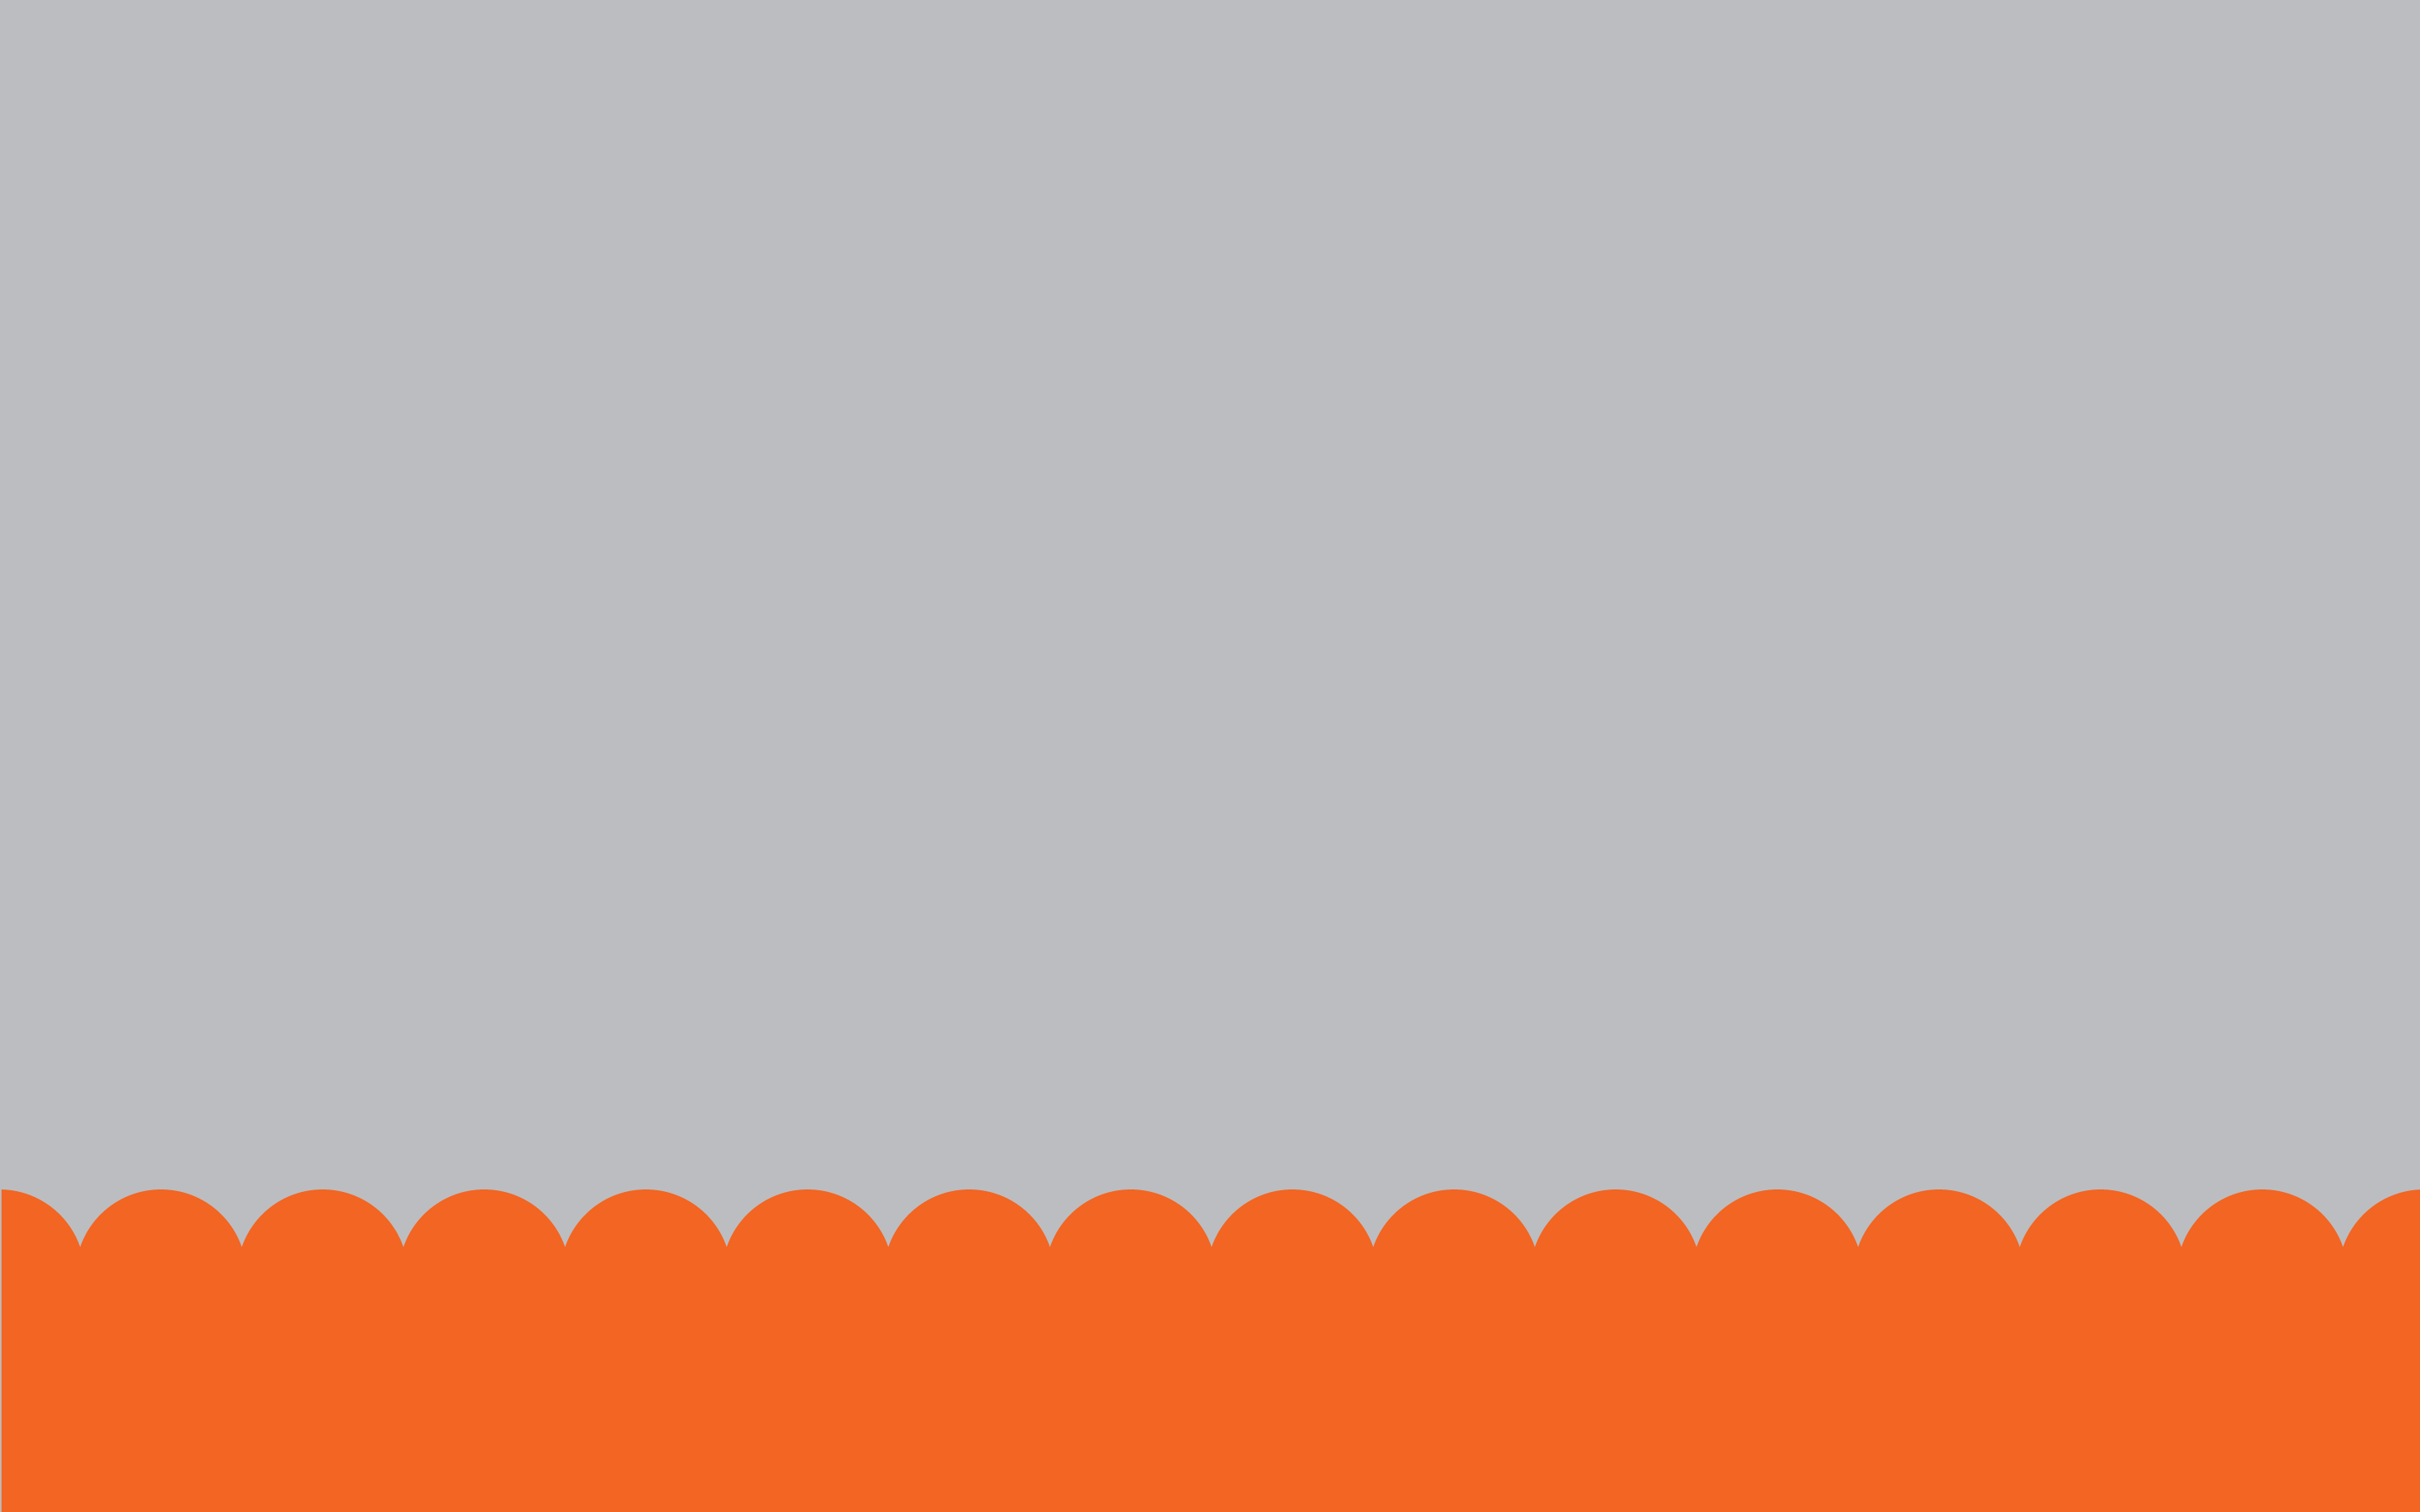 Scalloped desktop wallpaper freebies. How About Orange